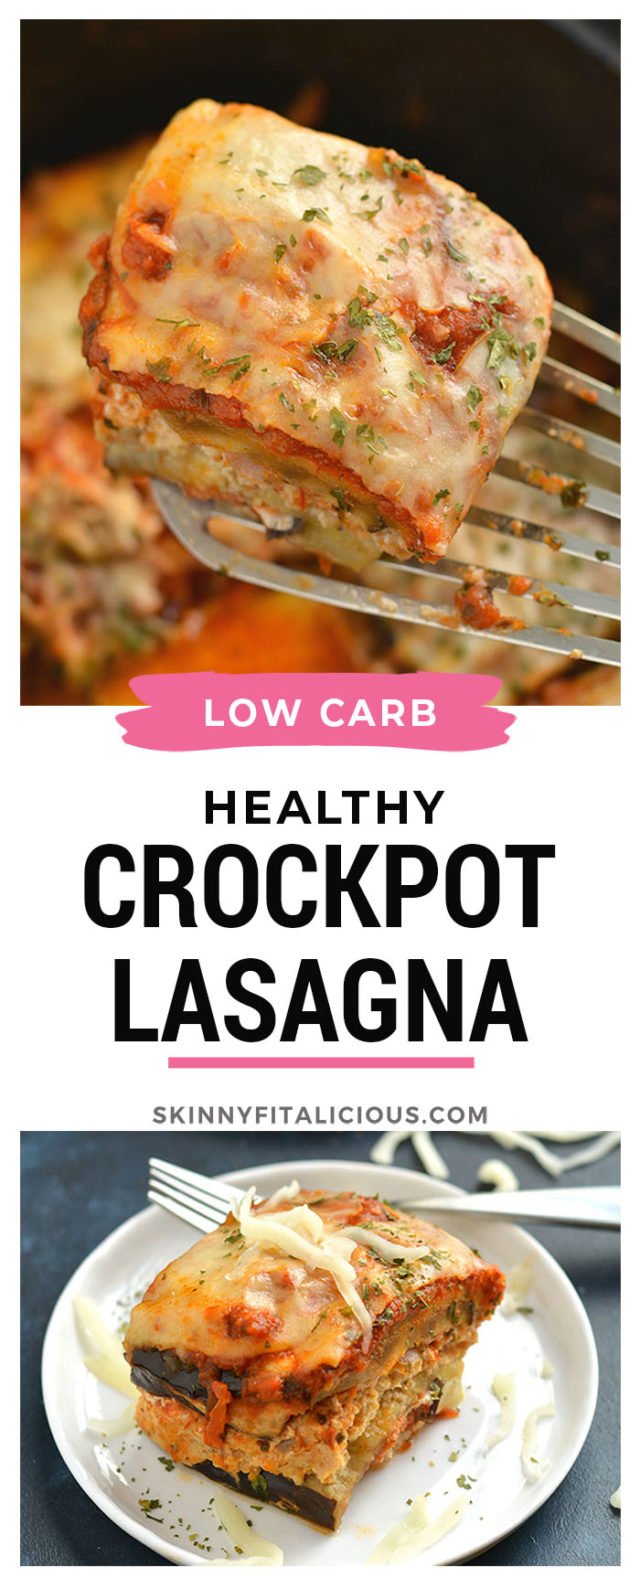 Low Carb Crockpot Lasagna {GF, Low Cal} - Skinny Fitalicious®